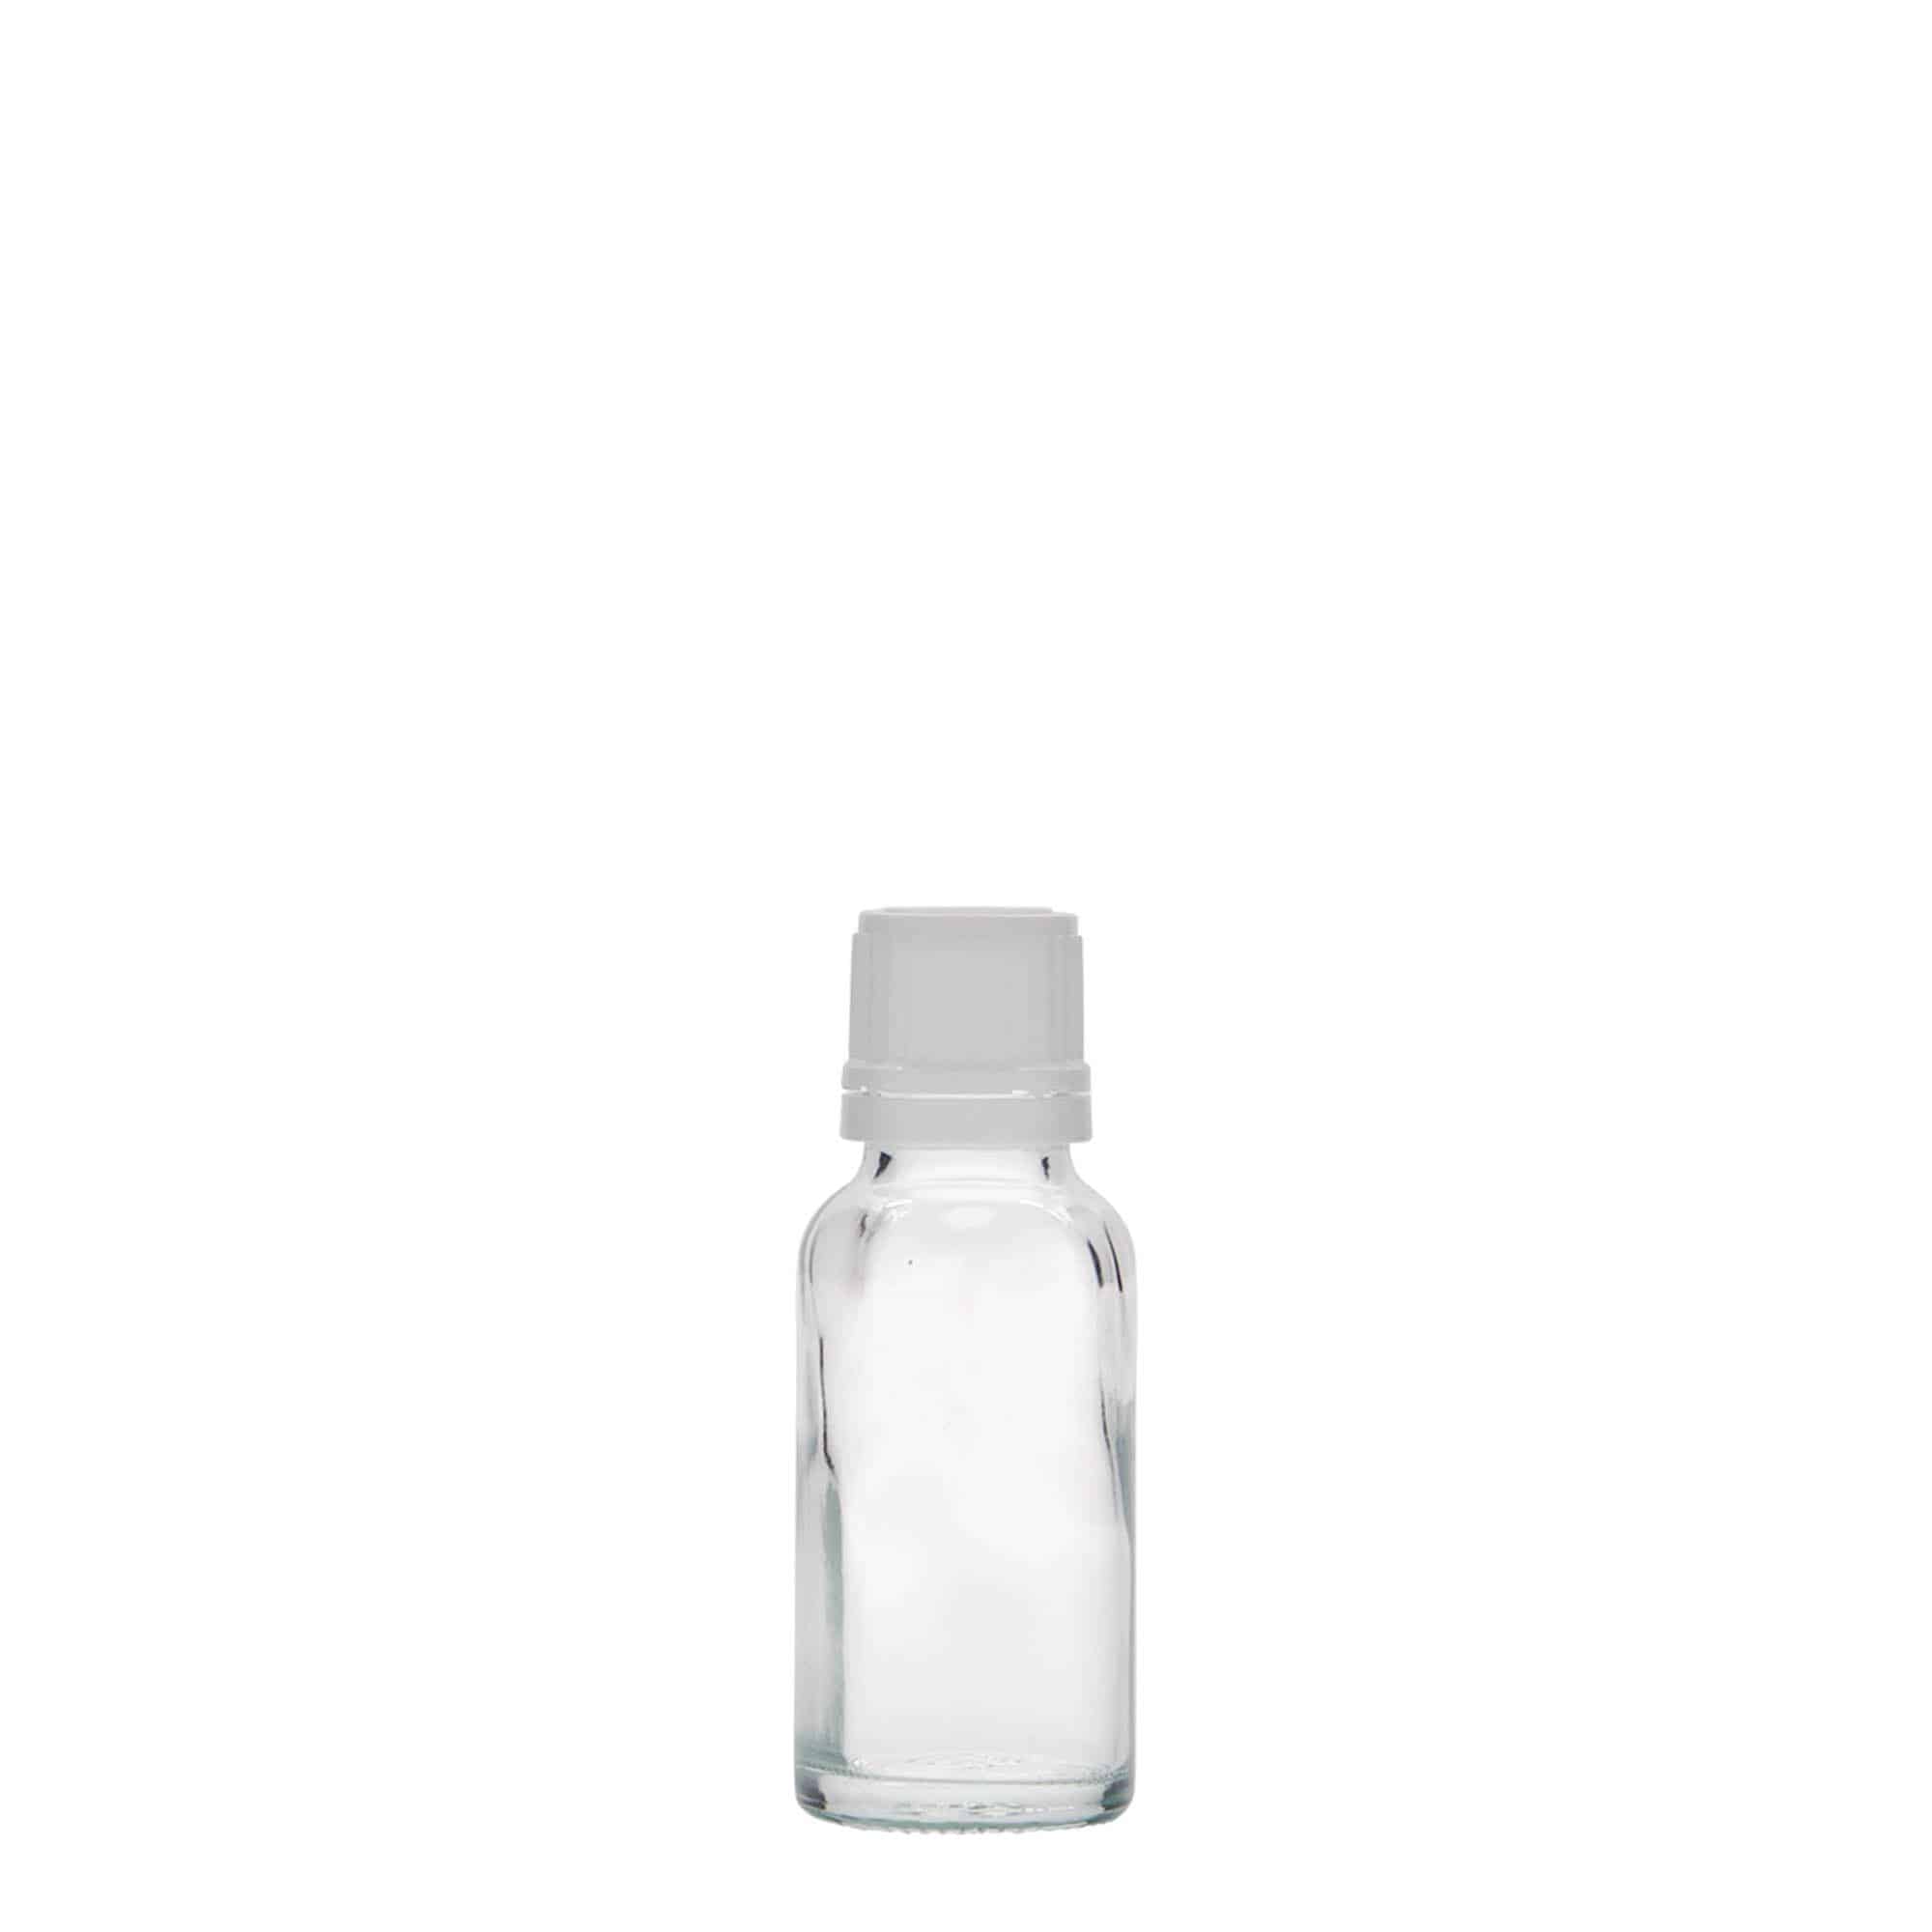 Flacon pharmaceutique 20 ml, verre, bouchage: DIN 18